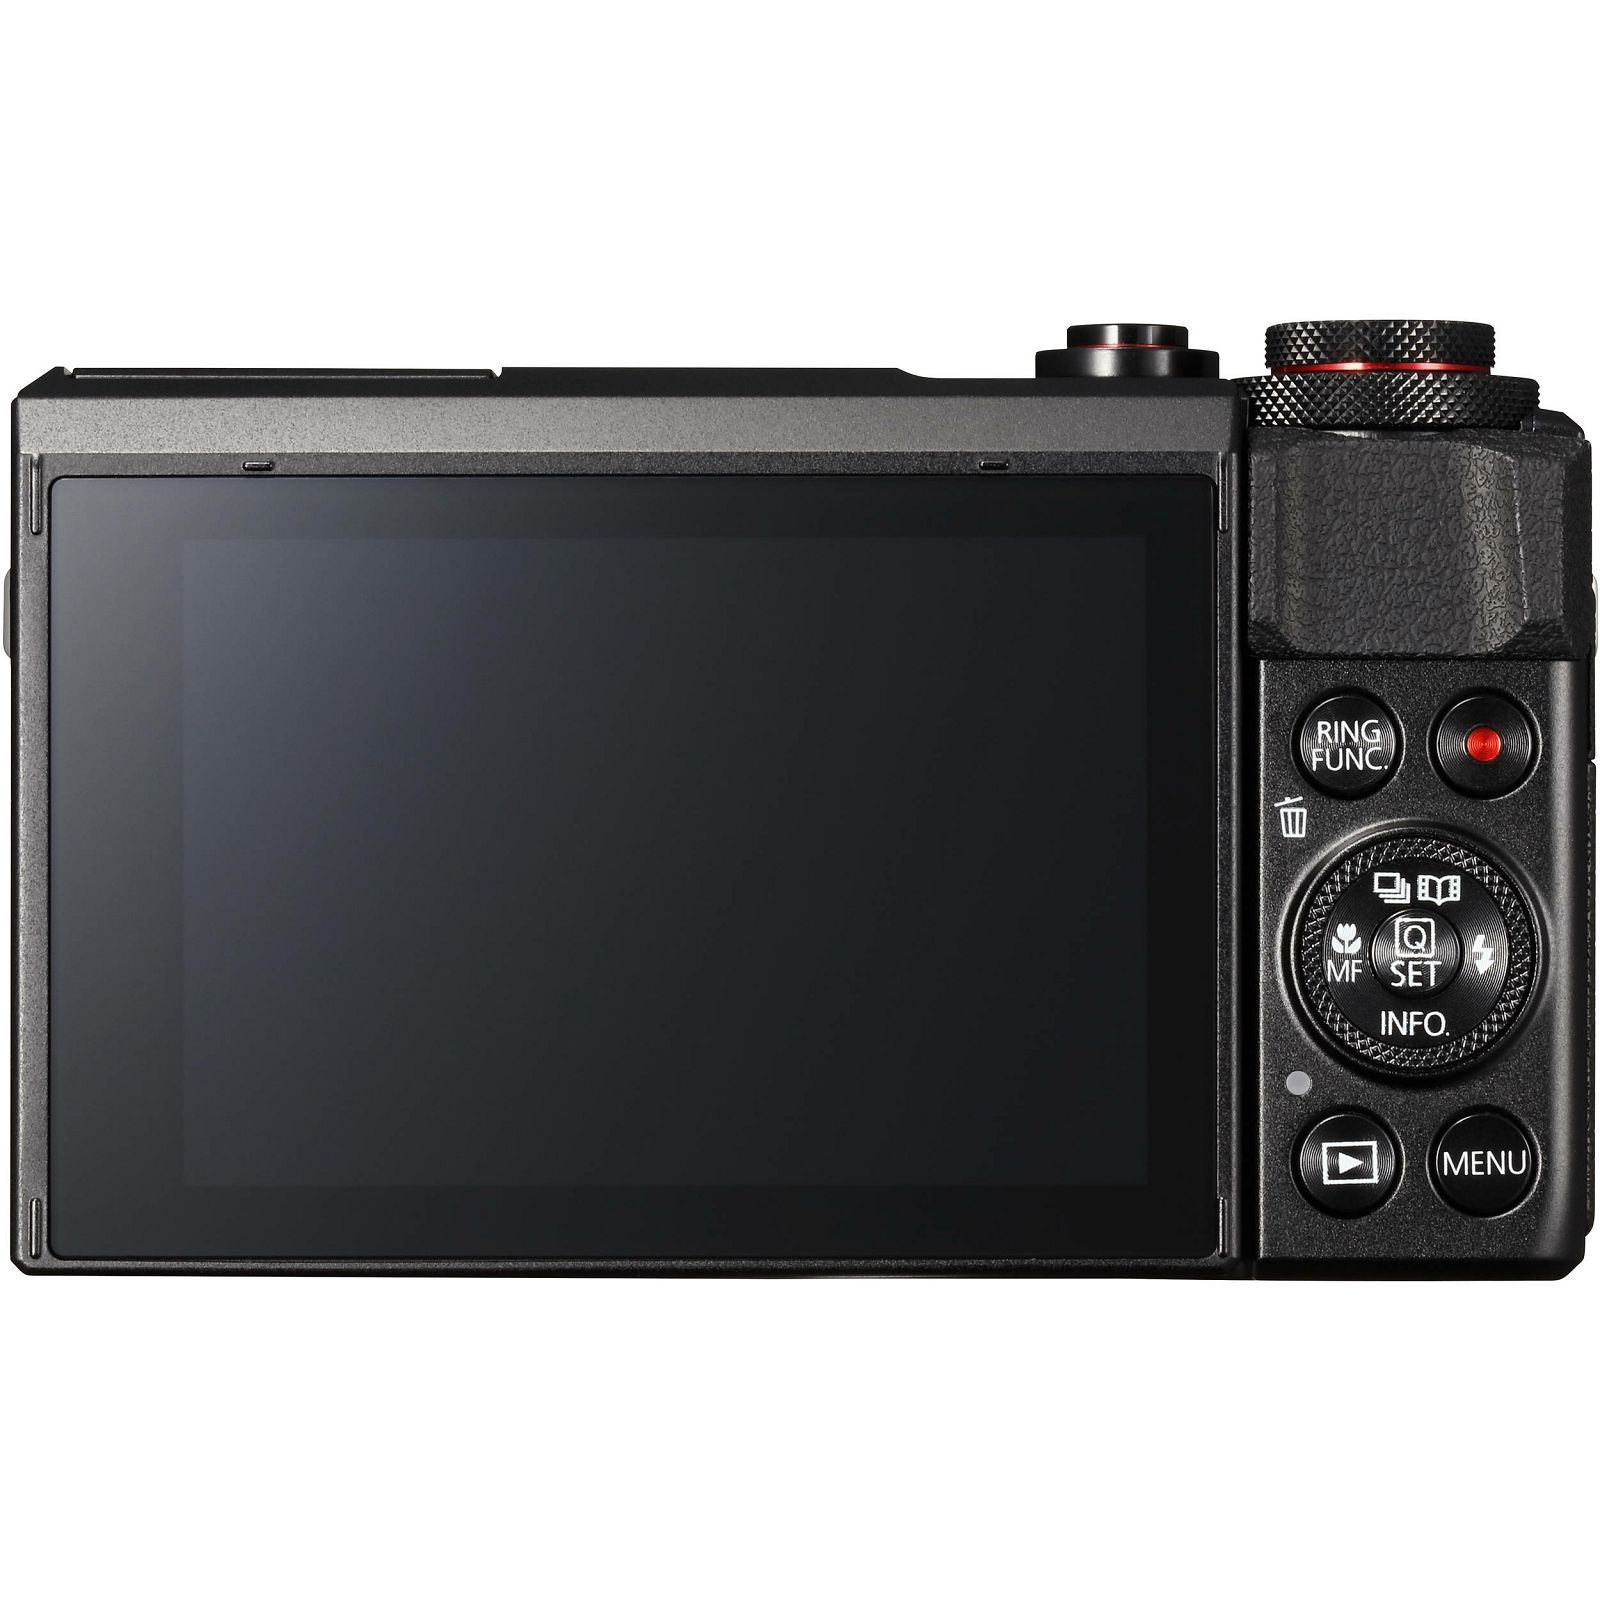 Canon PowerShot G7X II kompaktni digitalni fotoaparat G7X Mark II G7 X Digital Camera (1066C002AA)